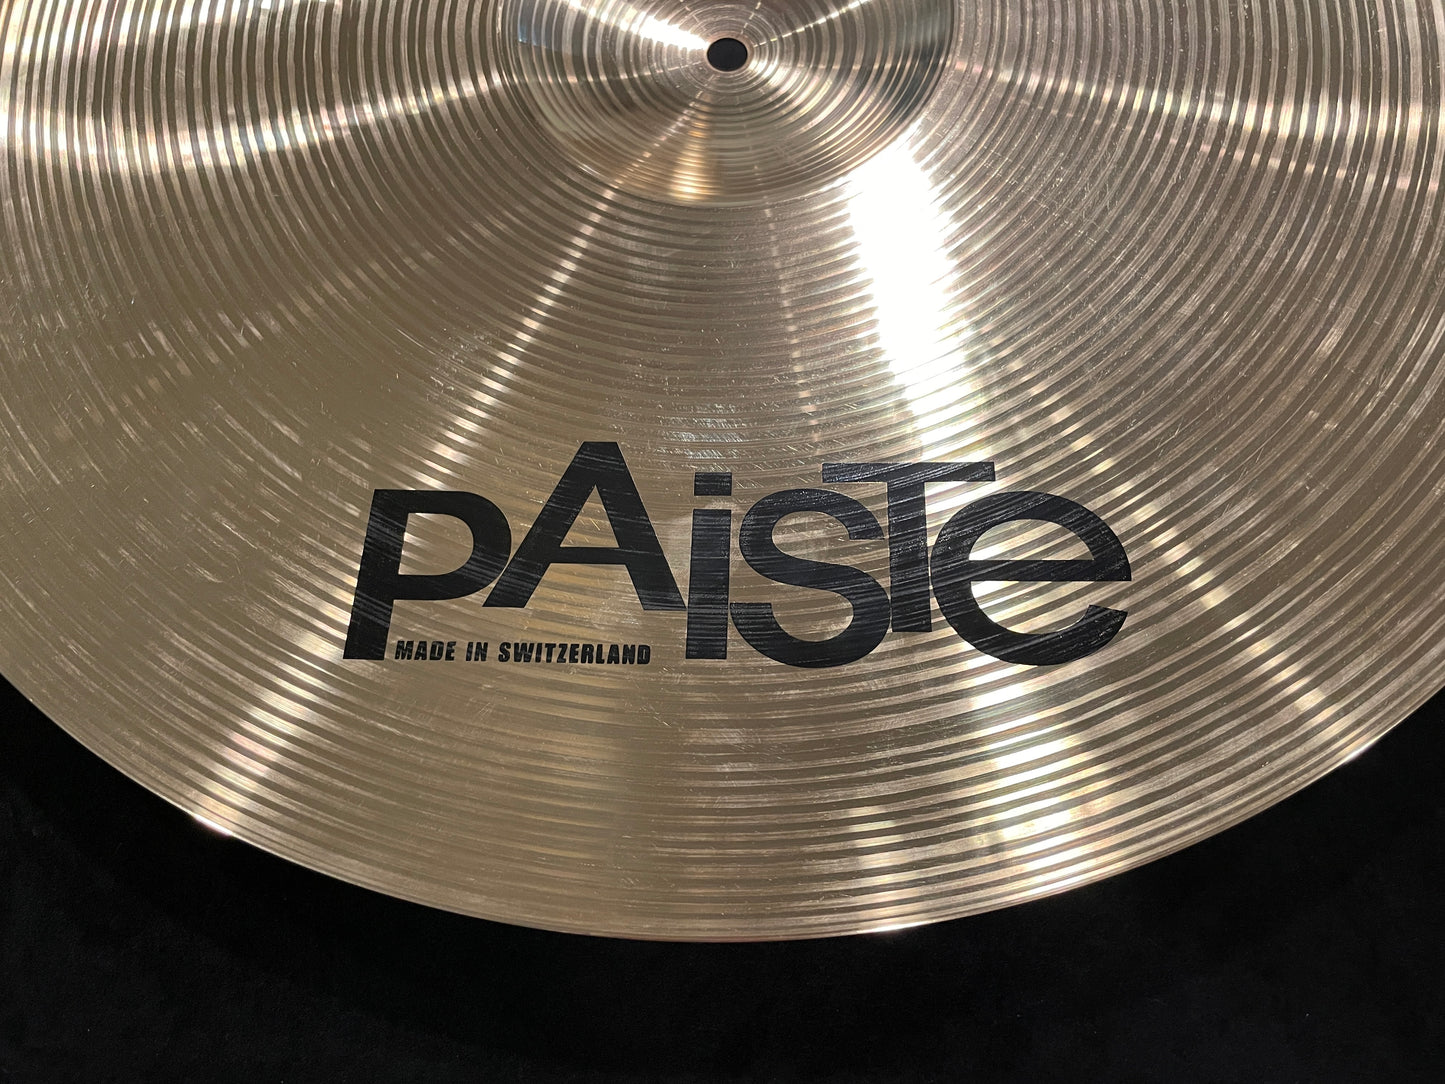 20" Paiste Signature Full Crash Cymbal 2132g